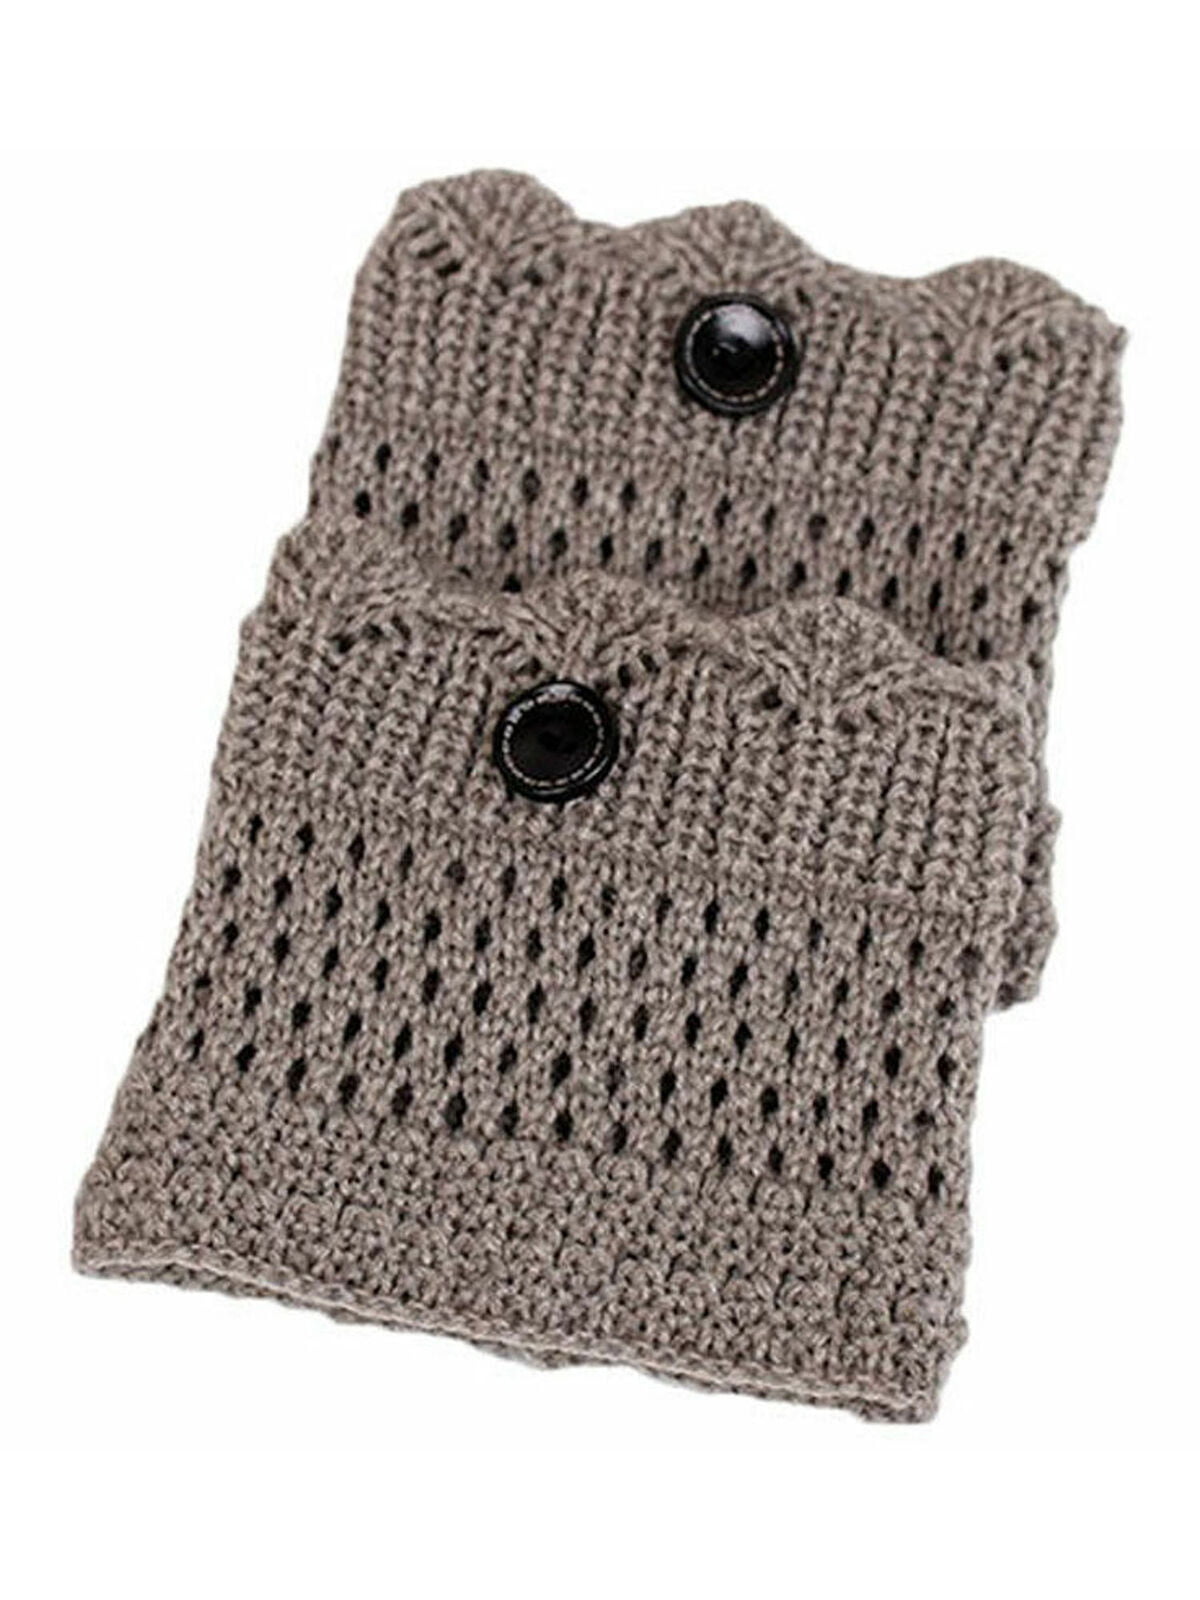 Women Winter Warm Crochet Knit Leg Warmers Button Boot Socks Toppers Cuffs 